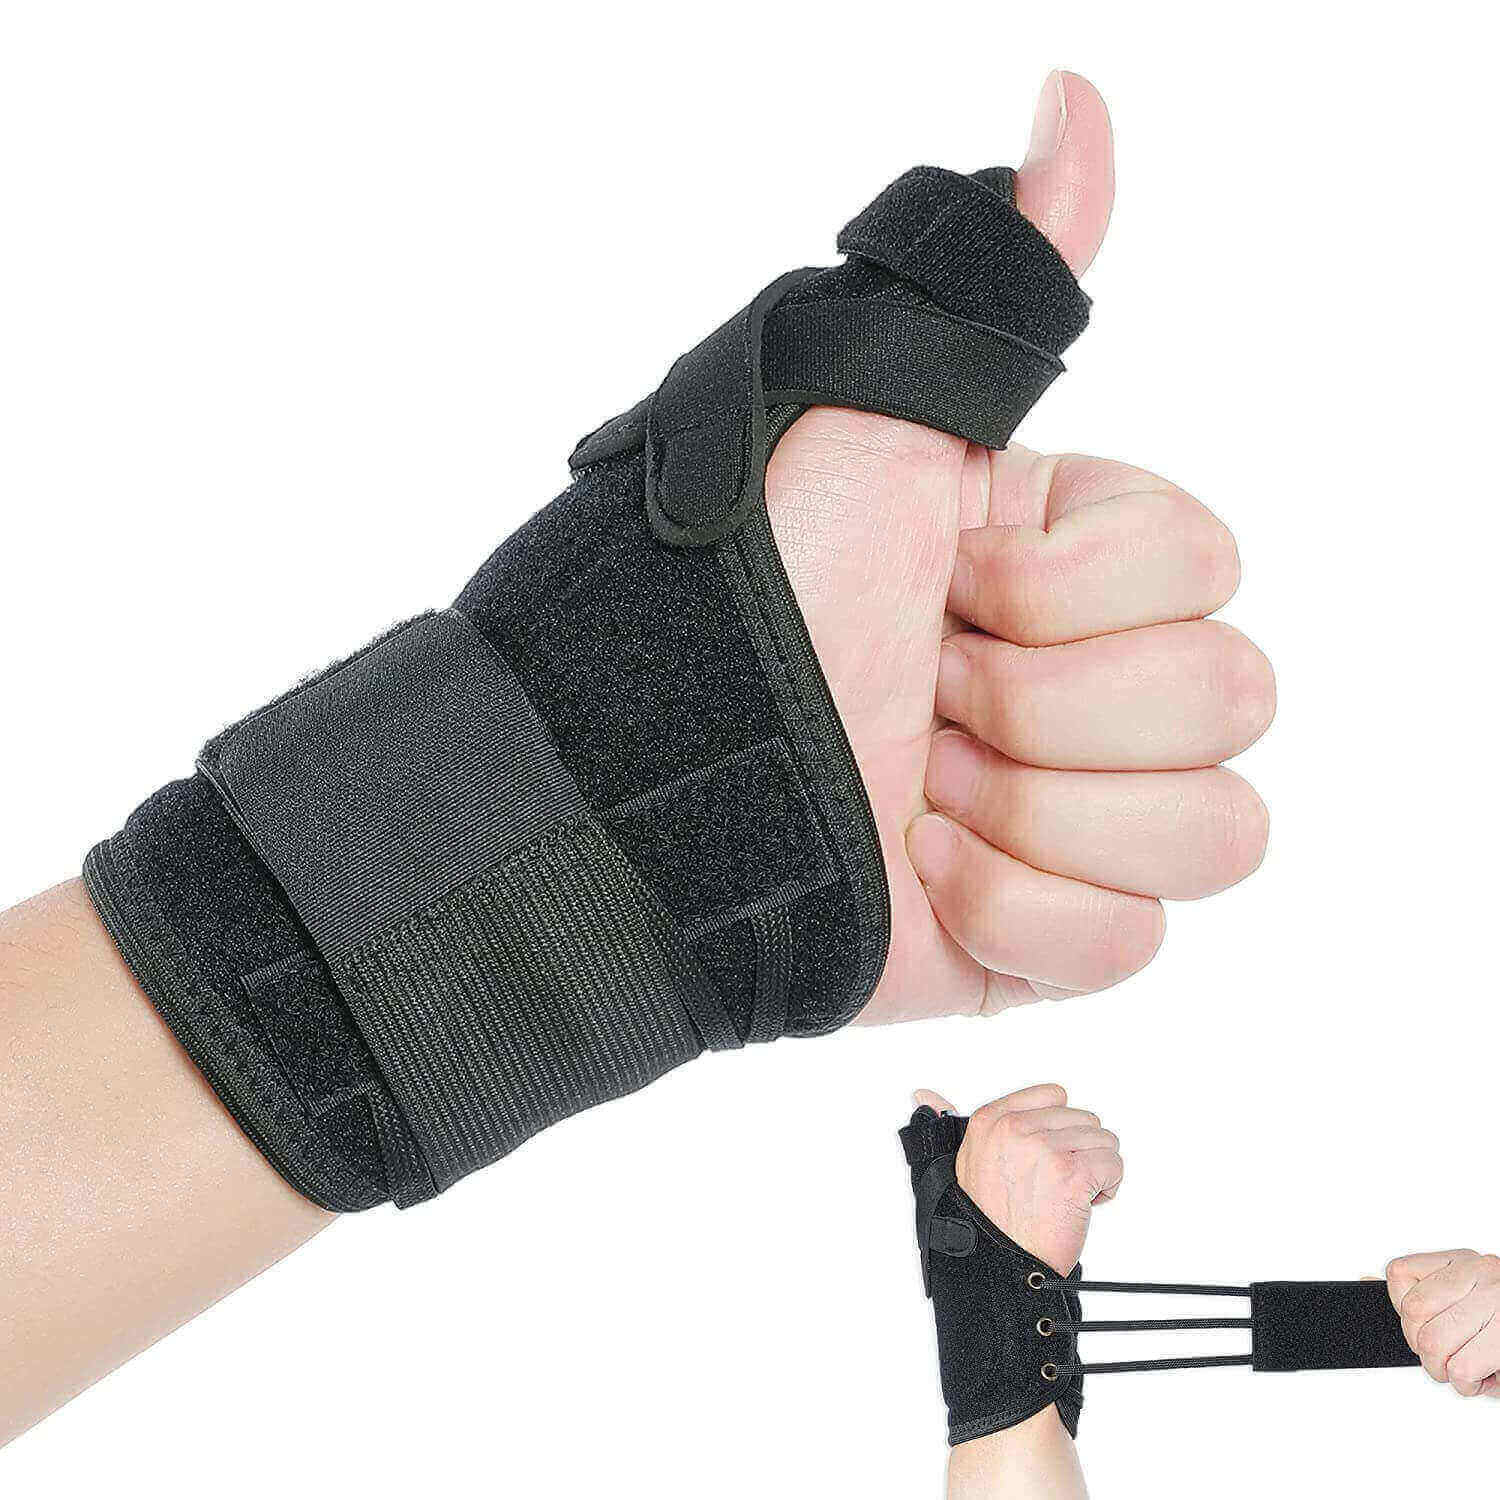 wrist thumb spica splint, hand brace for de Quervain's tenosynovitis, feature image